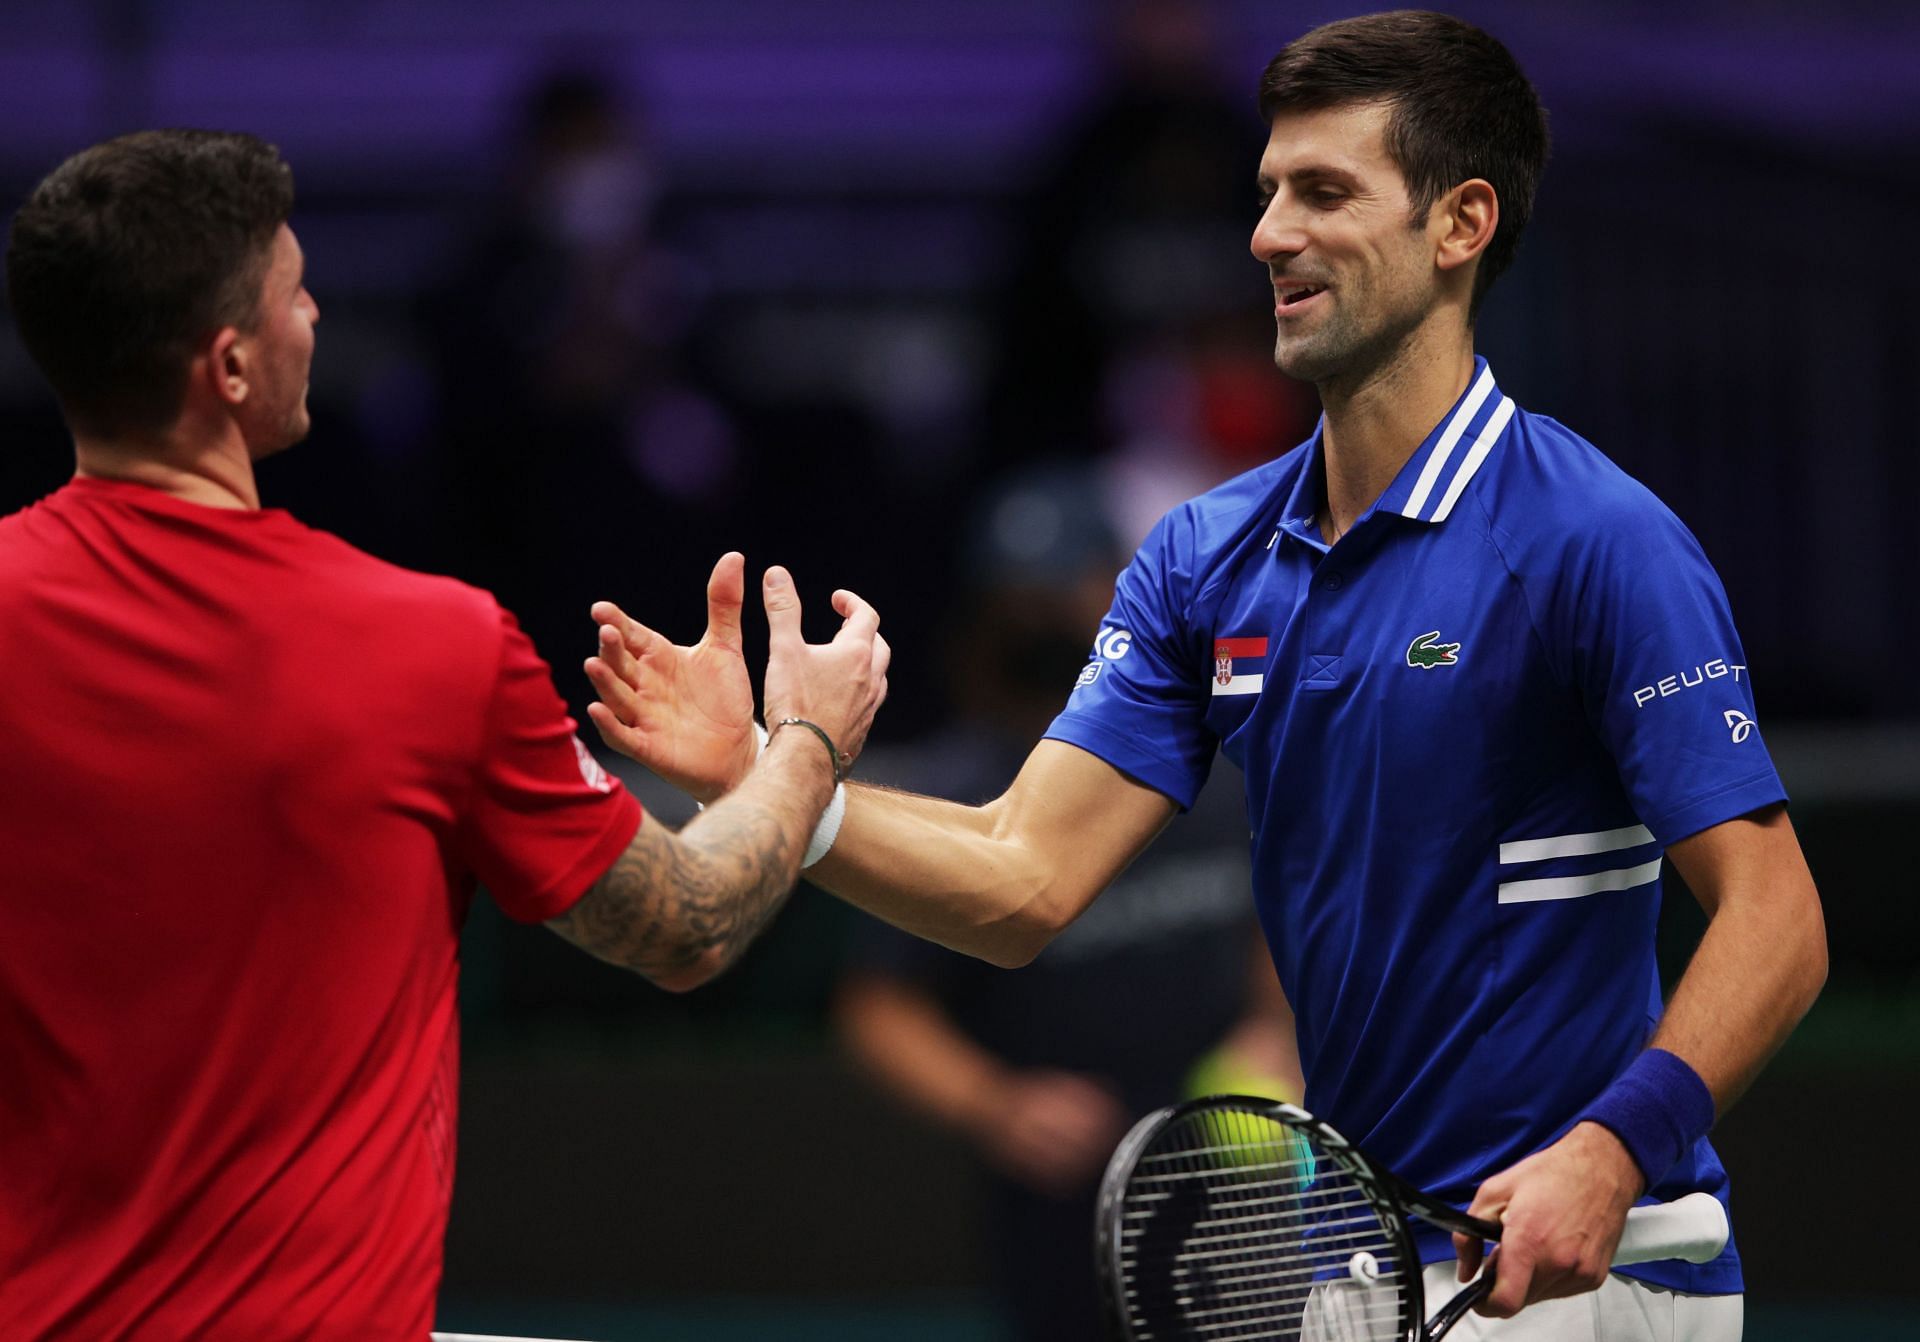 Novak Djokovic and Dennis Novak after their match at the Davis Cup Finals 2021